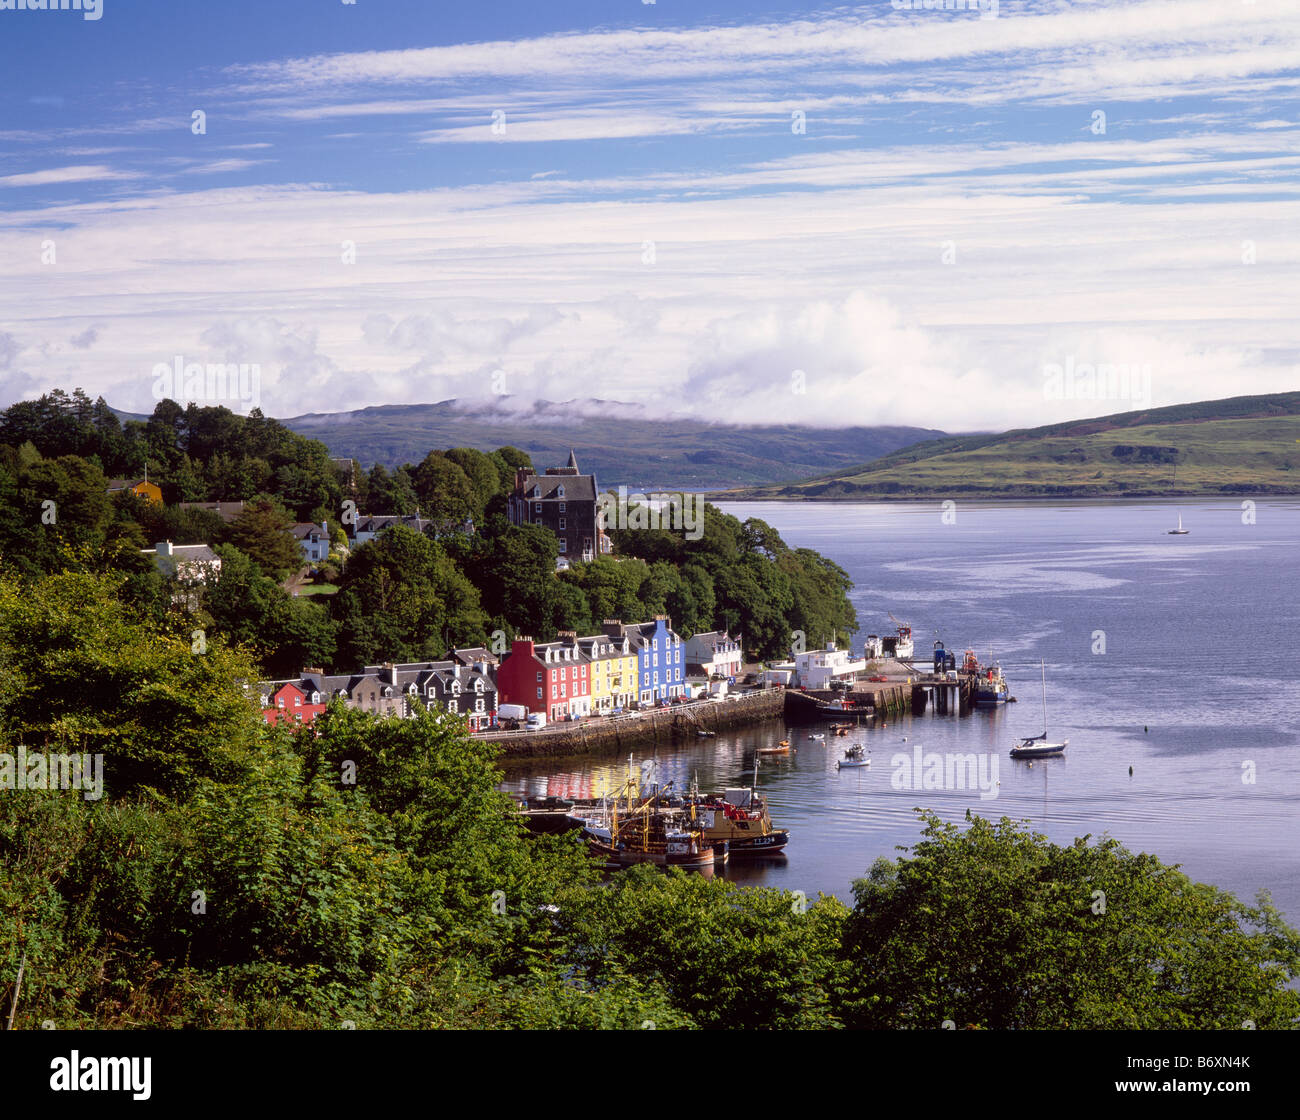 Tobermory, Isle Of Mull, Argyll and Bute, en Escocia, Reino Unido. Ajuste del programa de televisión infantil Balamory. Foto de stock